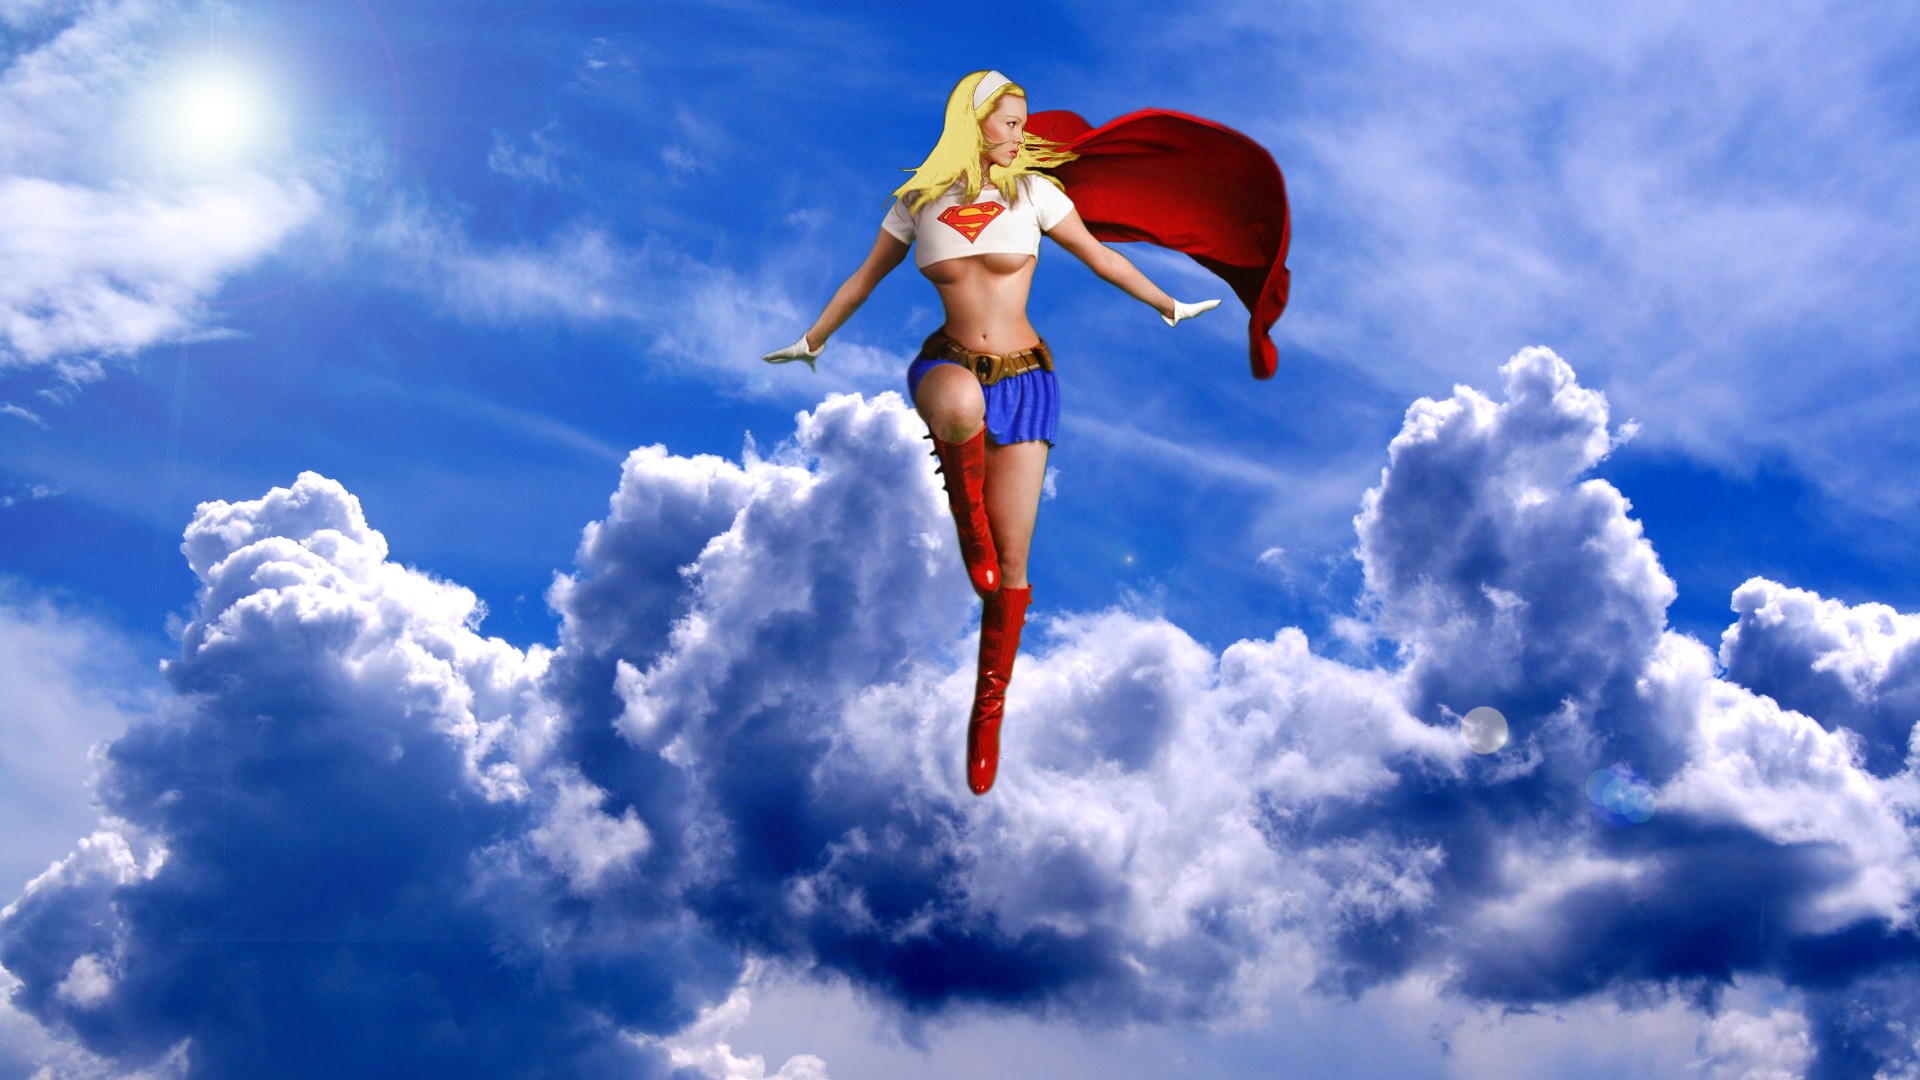 General 1920x1080 digital art DC Comics Supergirl women CGI superheroines cape boobs belly miniskirt legs boots sky clouds blonde Powergirl